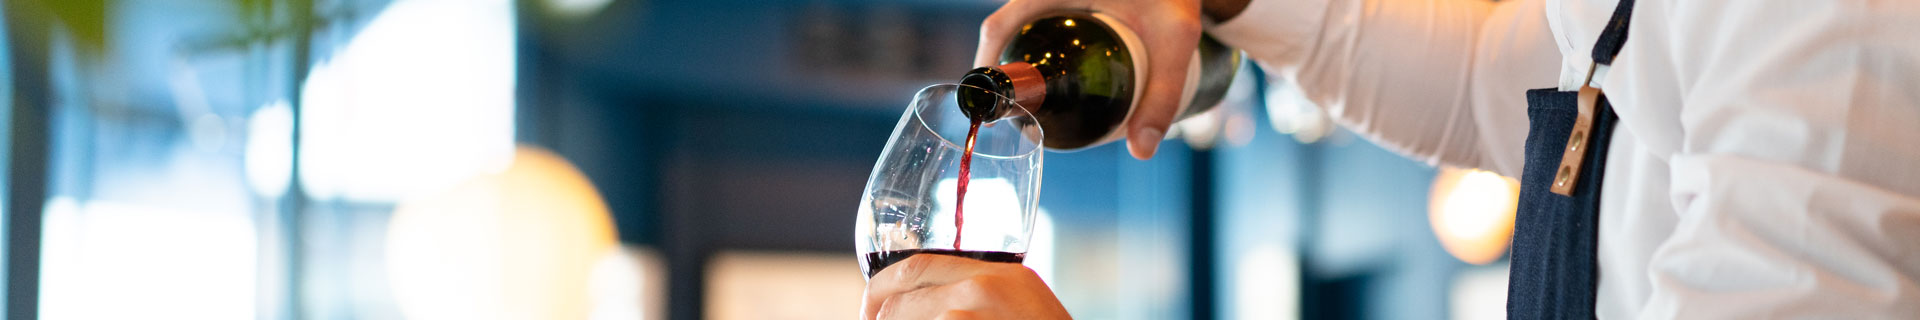 staff pours wine into a glass